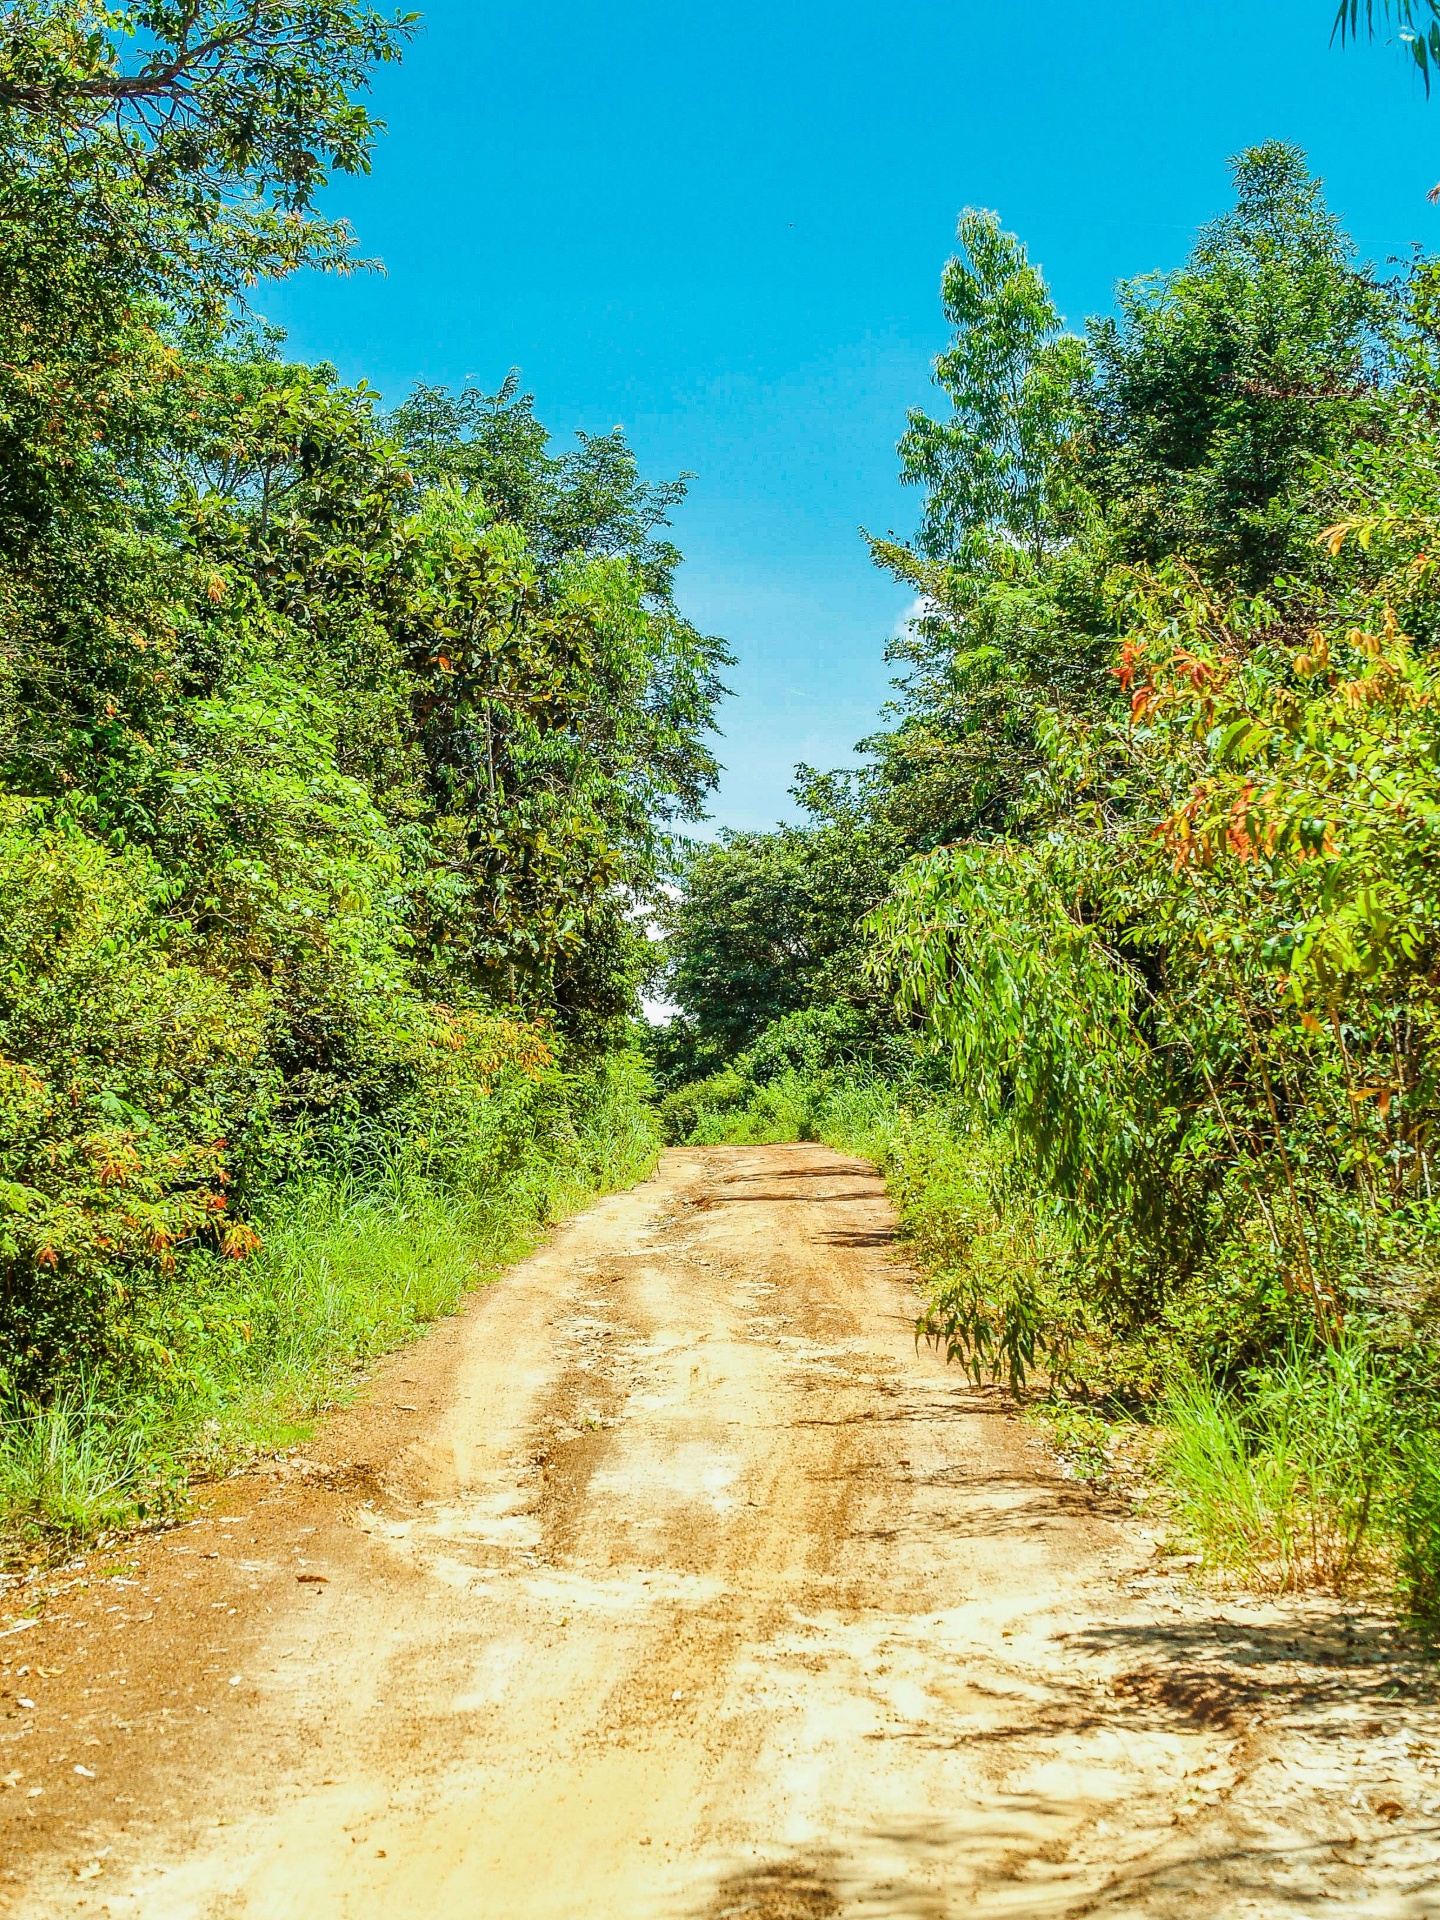 Road In Rural Area Farm